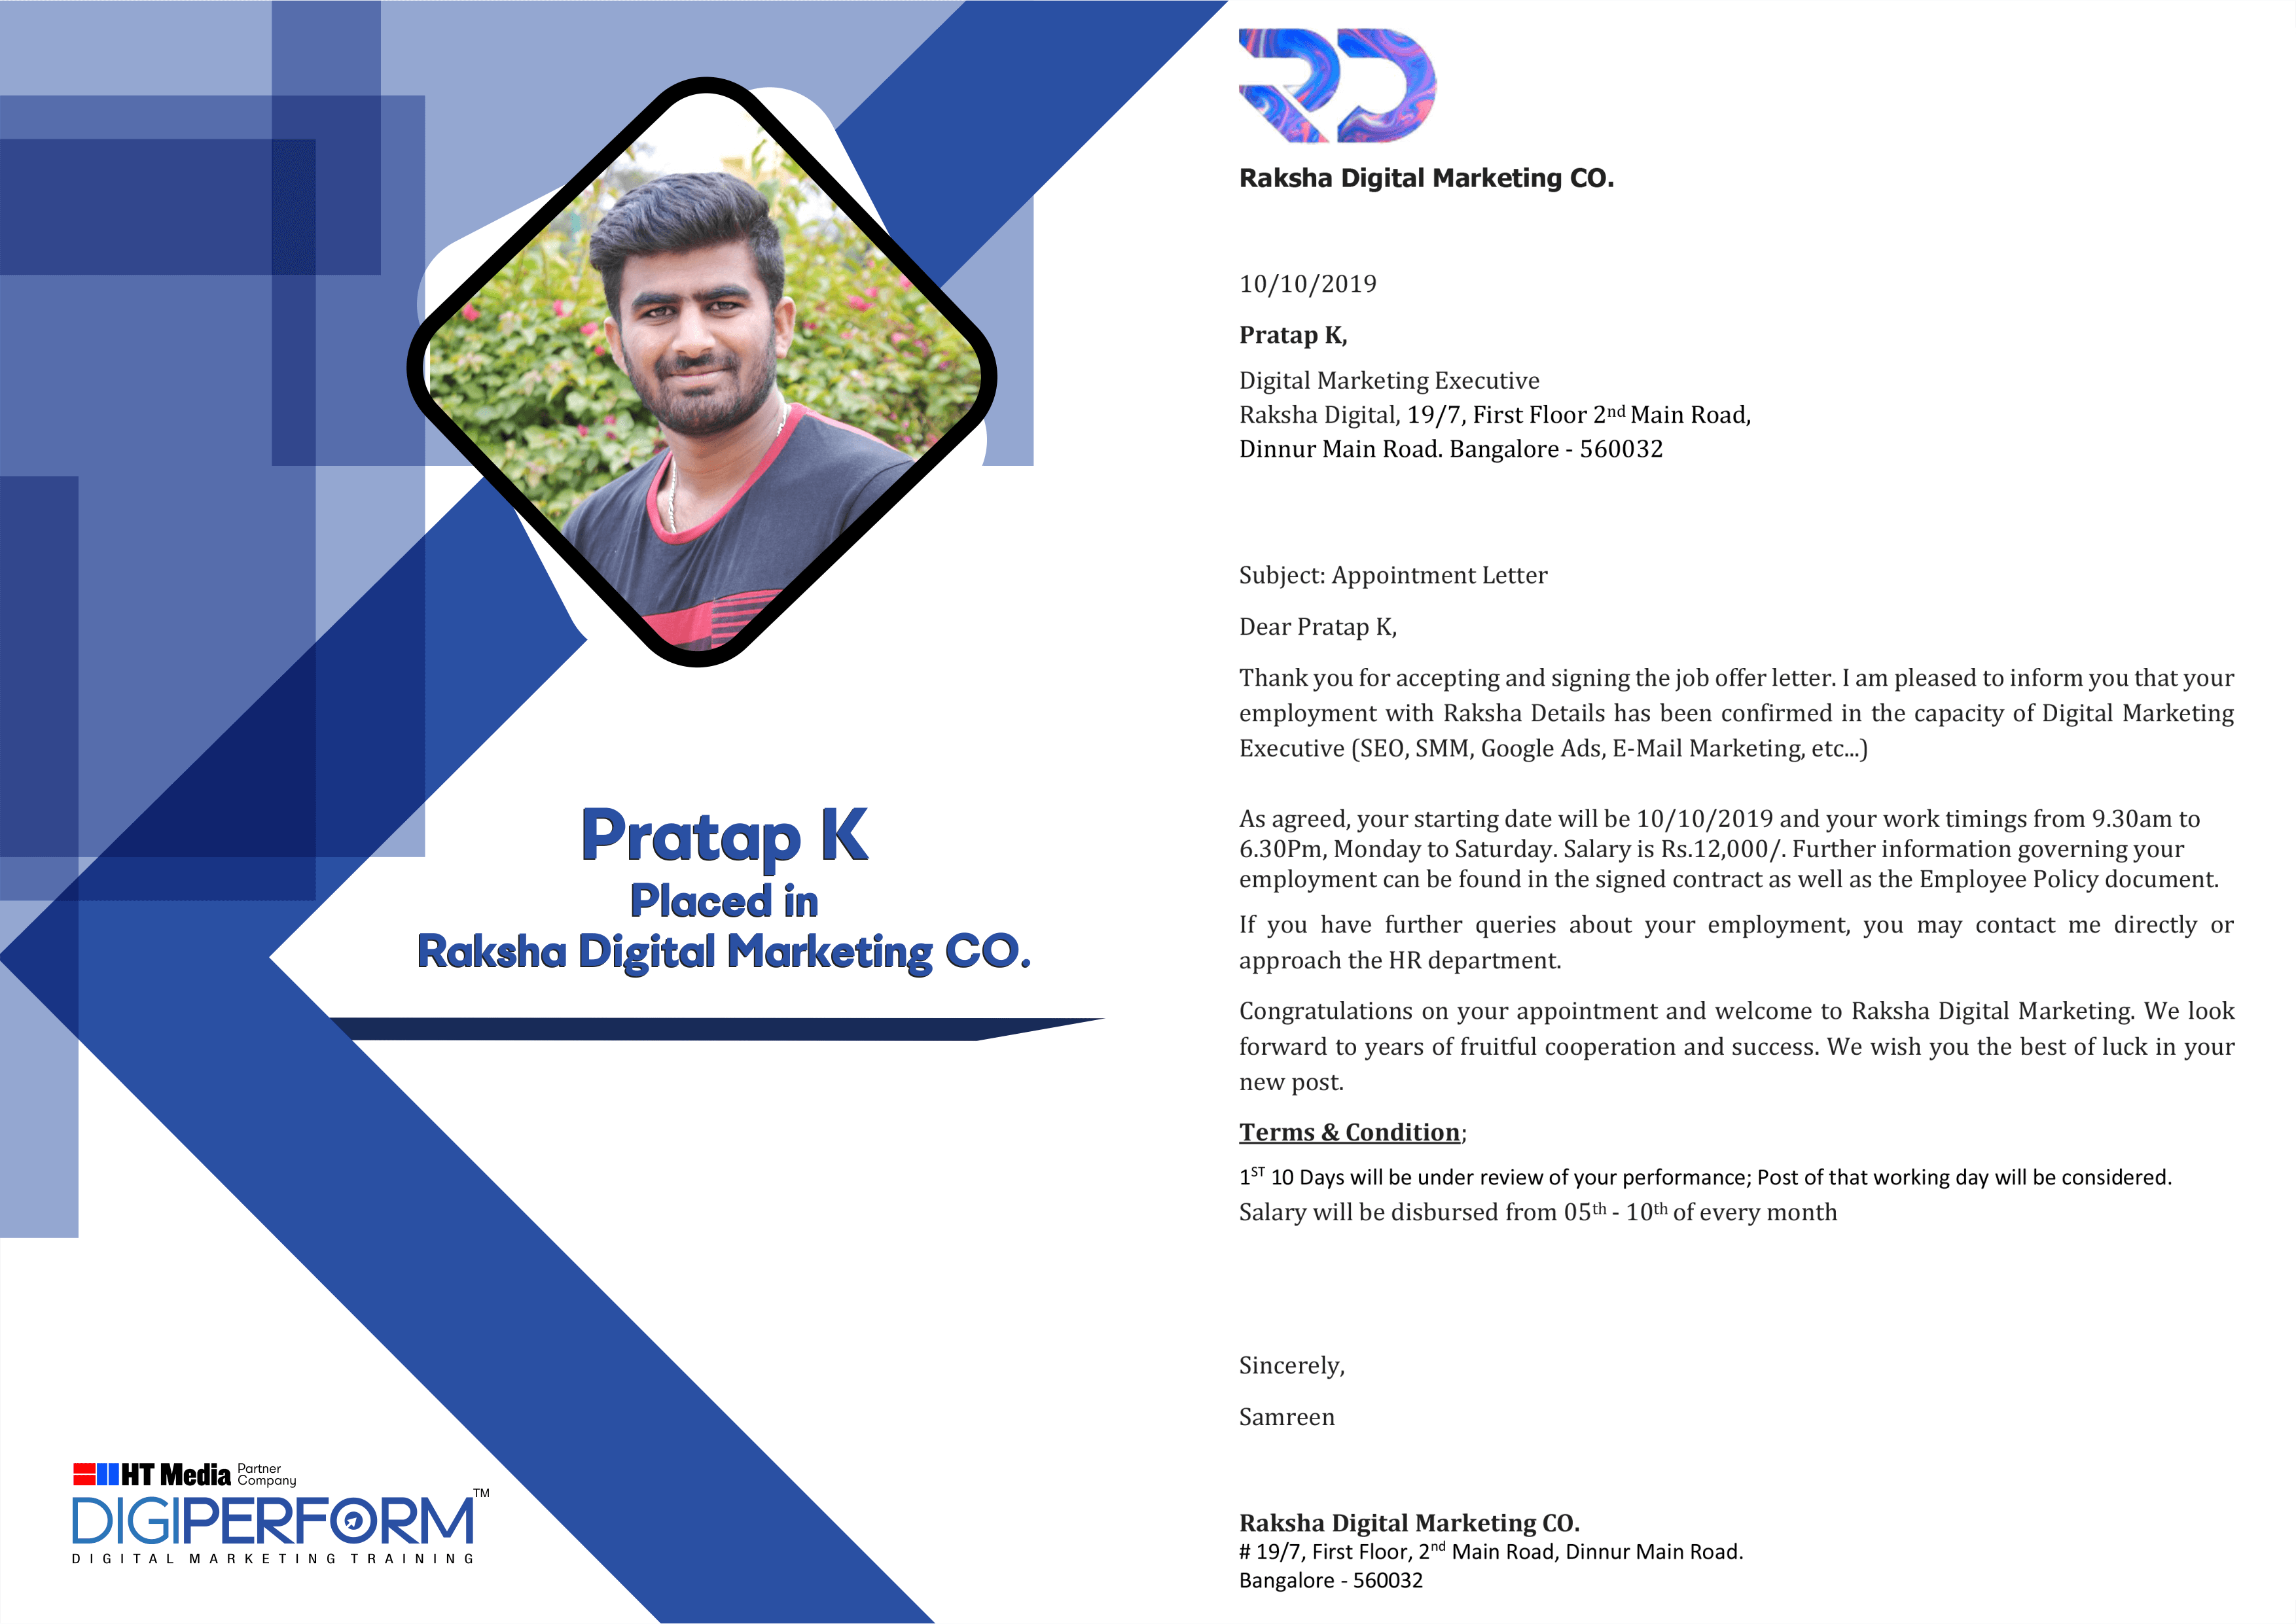 Digiperform Students - Pratap K Placed in Raksha Digital Marketing Co.